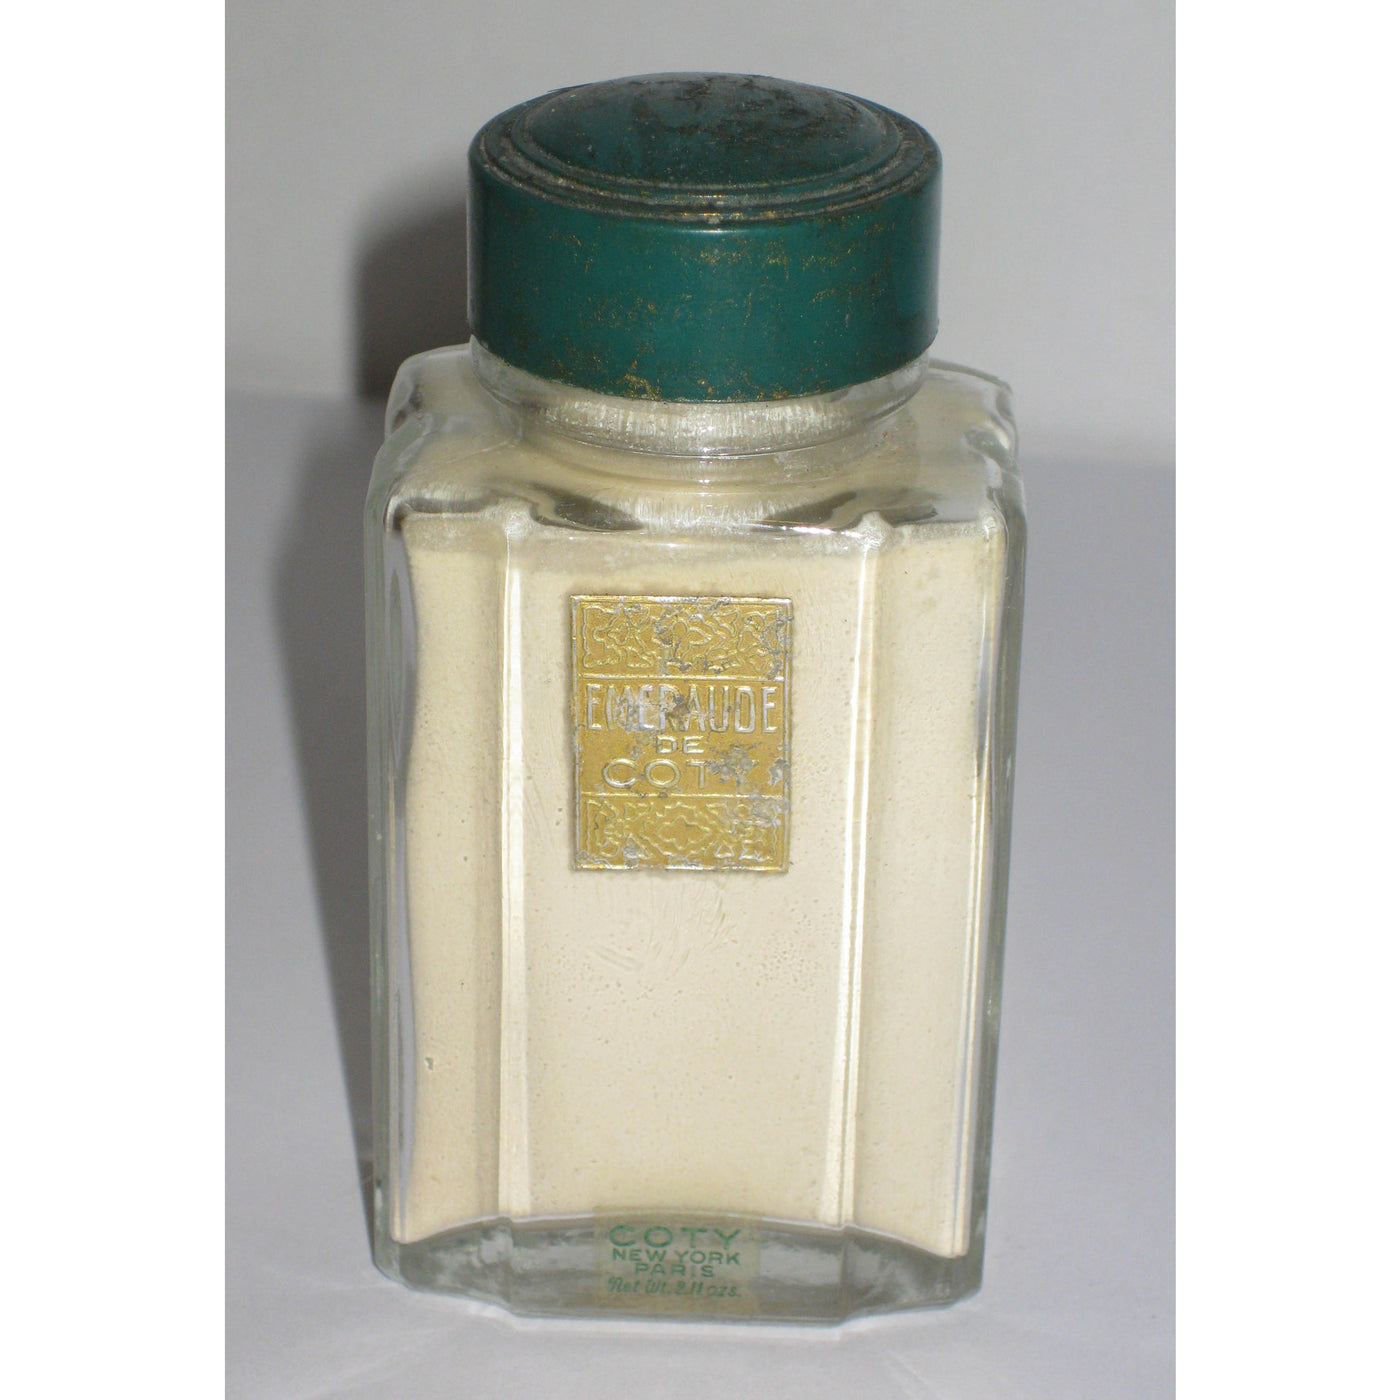 Vintage Emeraude Powder Sachet By Coty